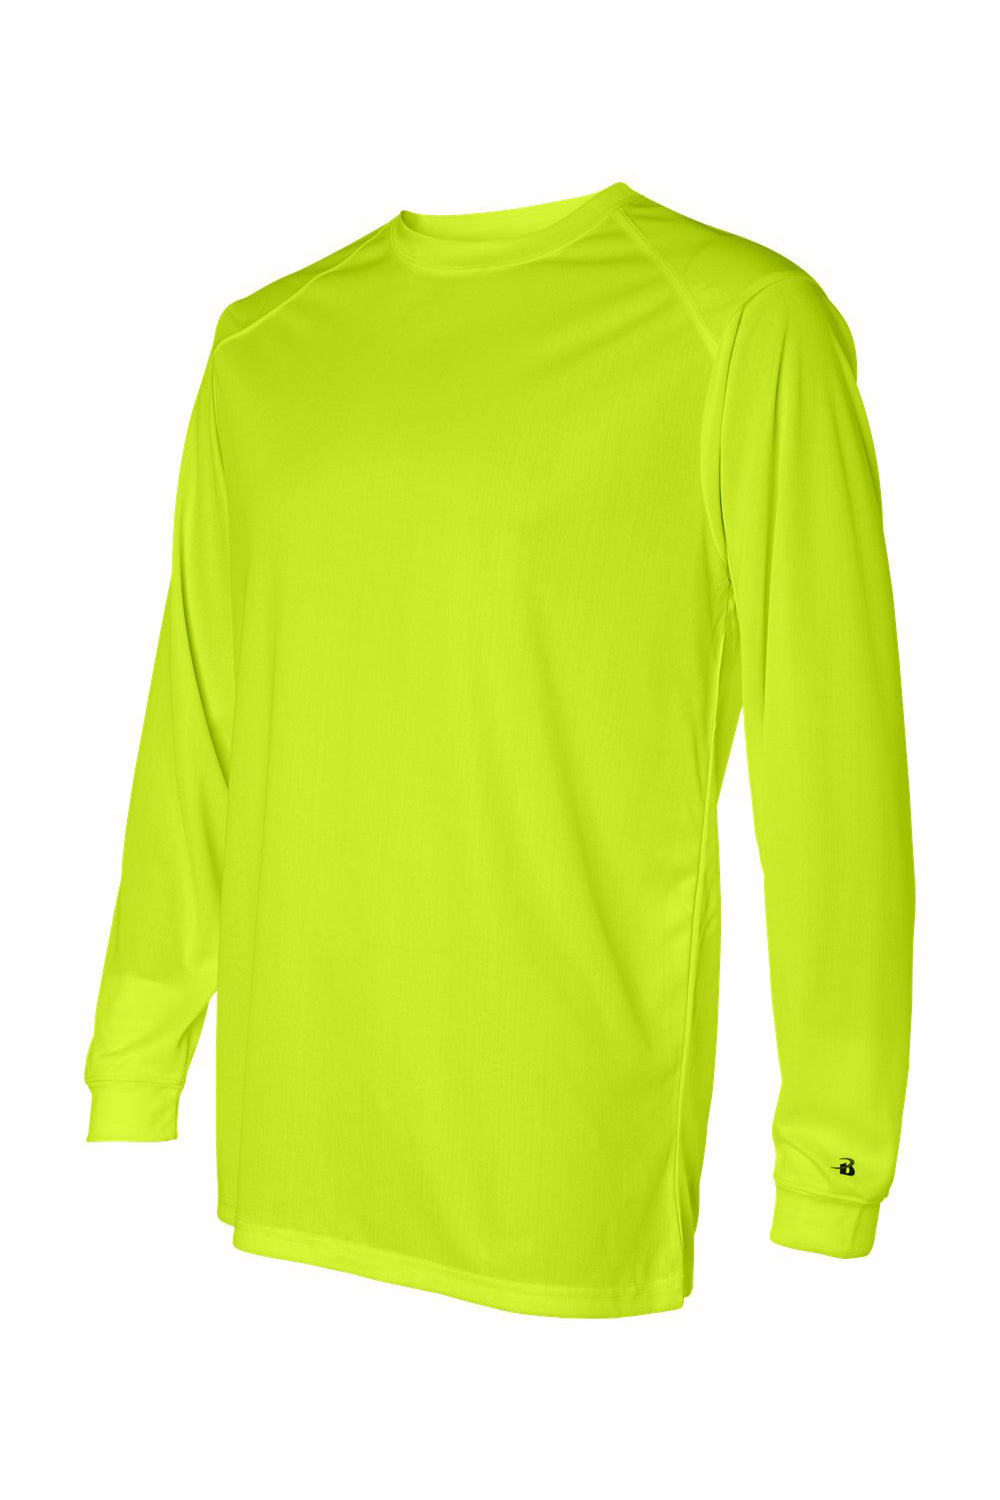 Badger 4104 Mens B-Core Moisture Wicking Long Sleeve Crewneck T-Shirt Safety Yellow Flat Front